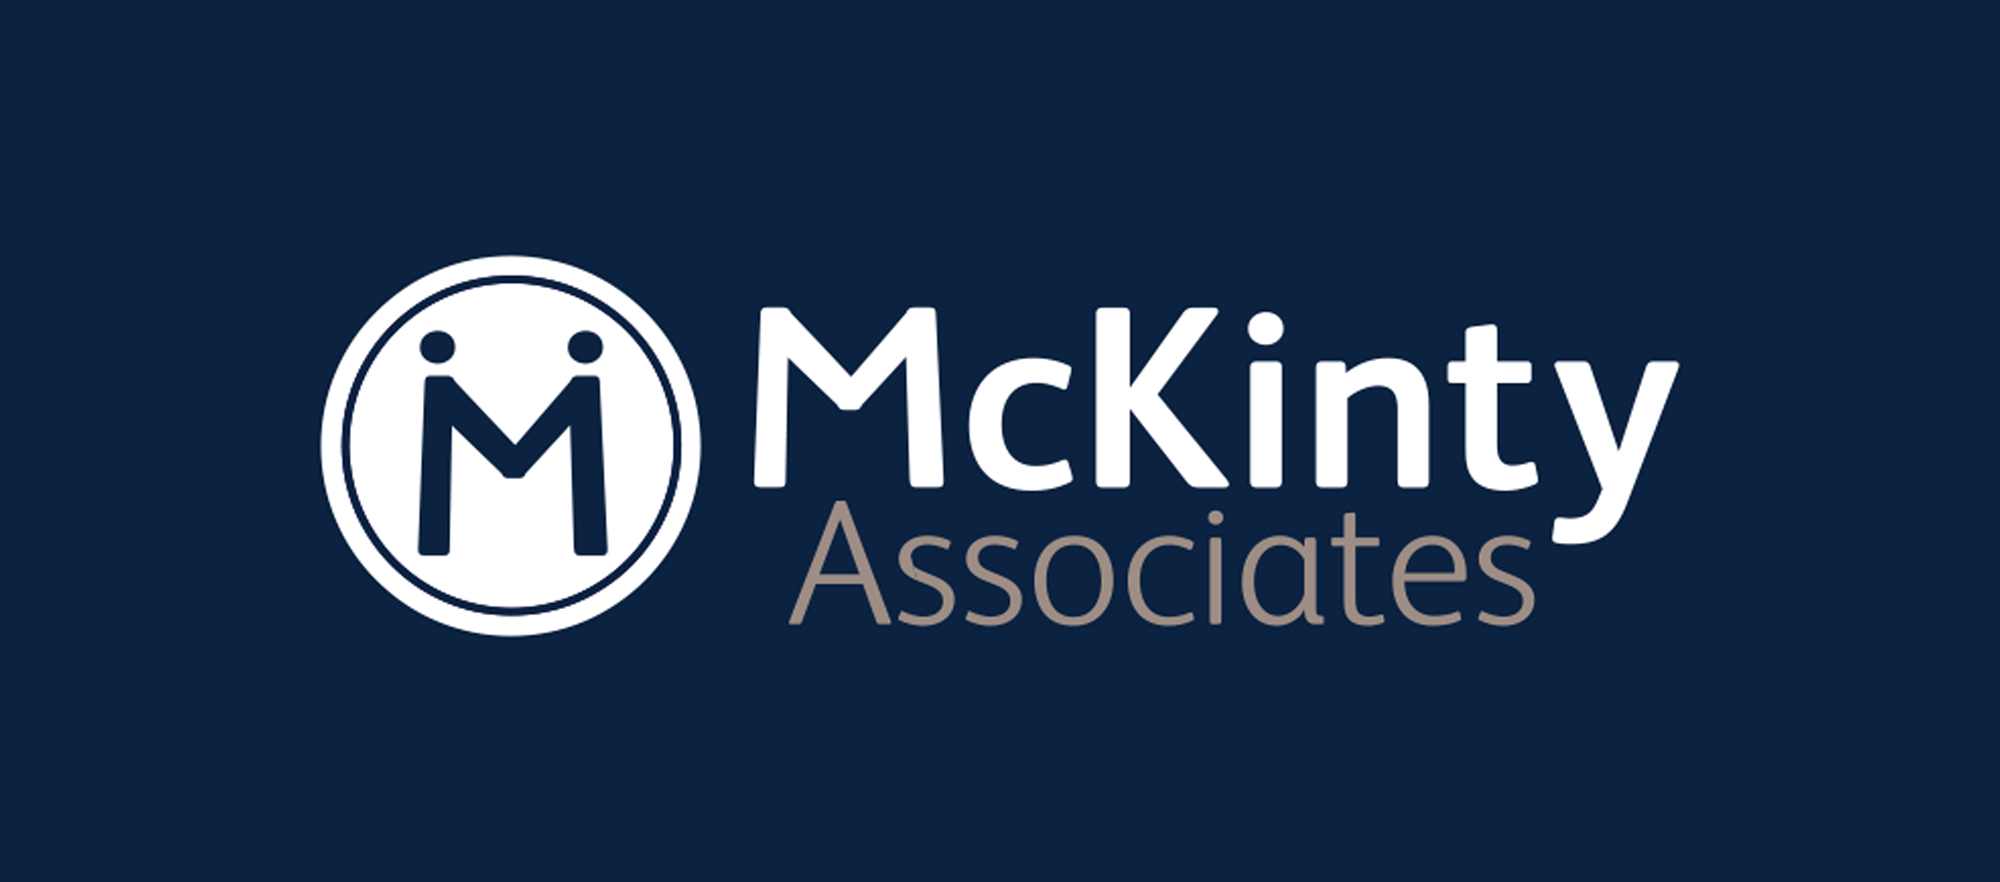 McKinty Associates Logo Design